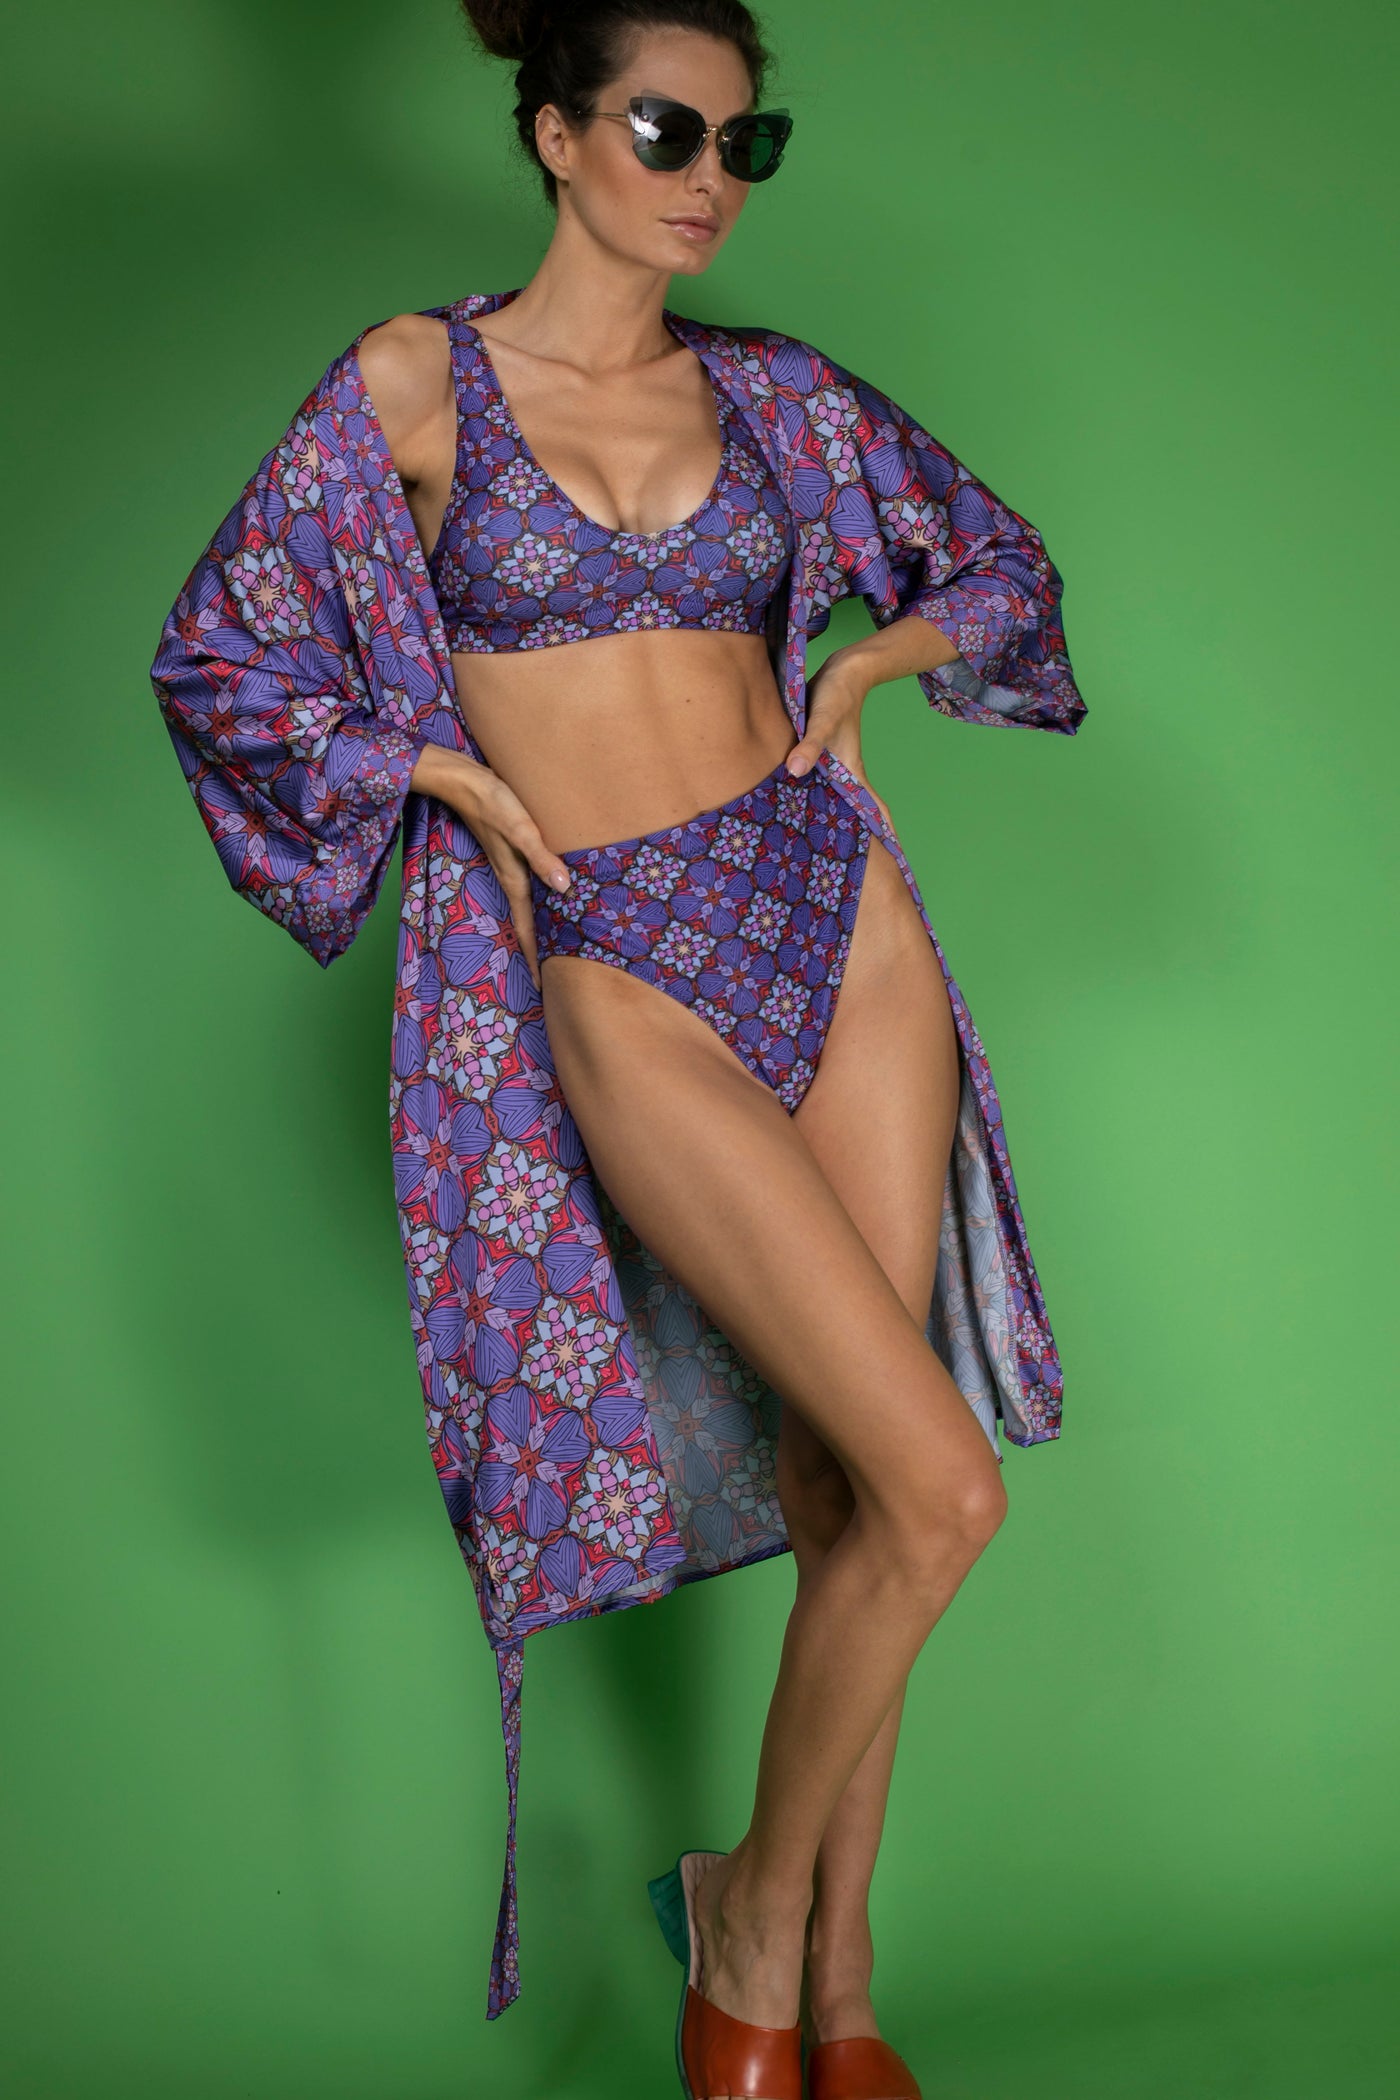 VIOLET italianate Purple high-waisted bikini